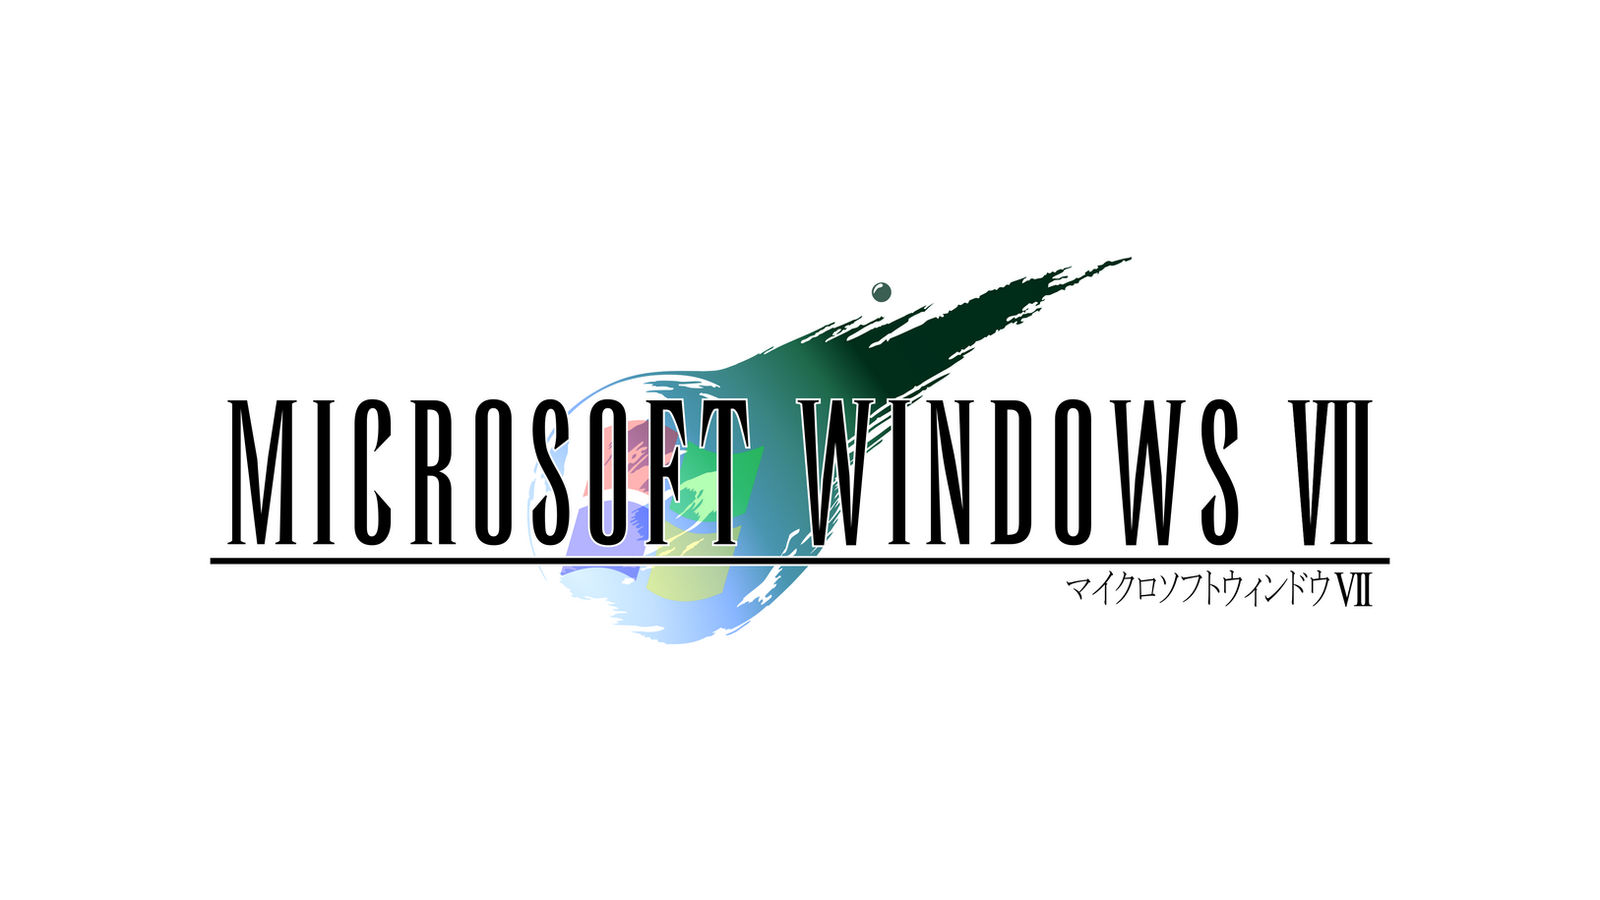 Final Fantasy VII style Windows 7 Logo 2.0